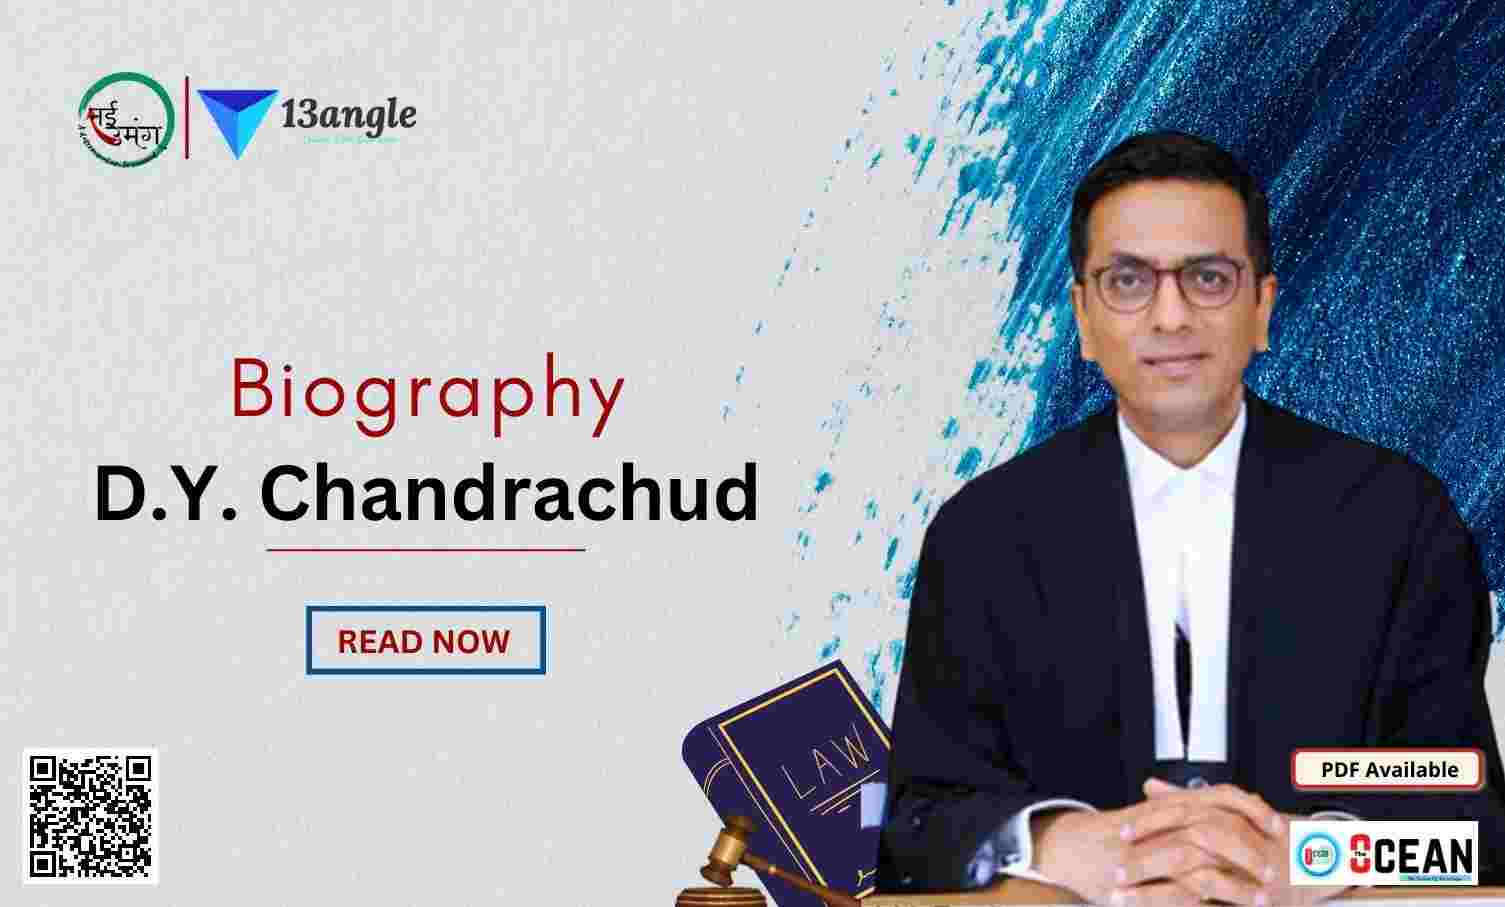 Biography of D.Y. Chandrachud- नई उमंग (13angle)